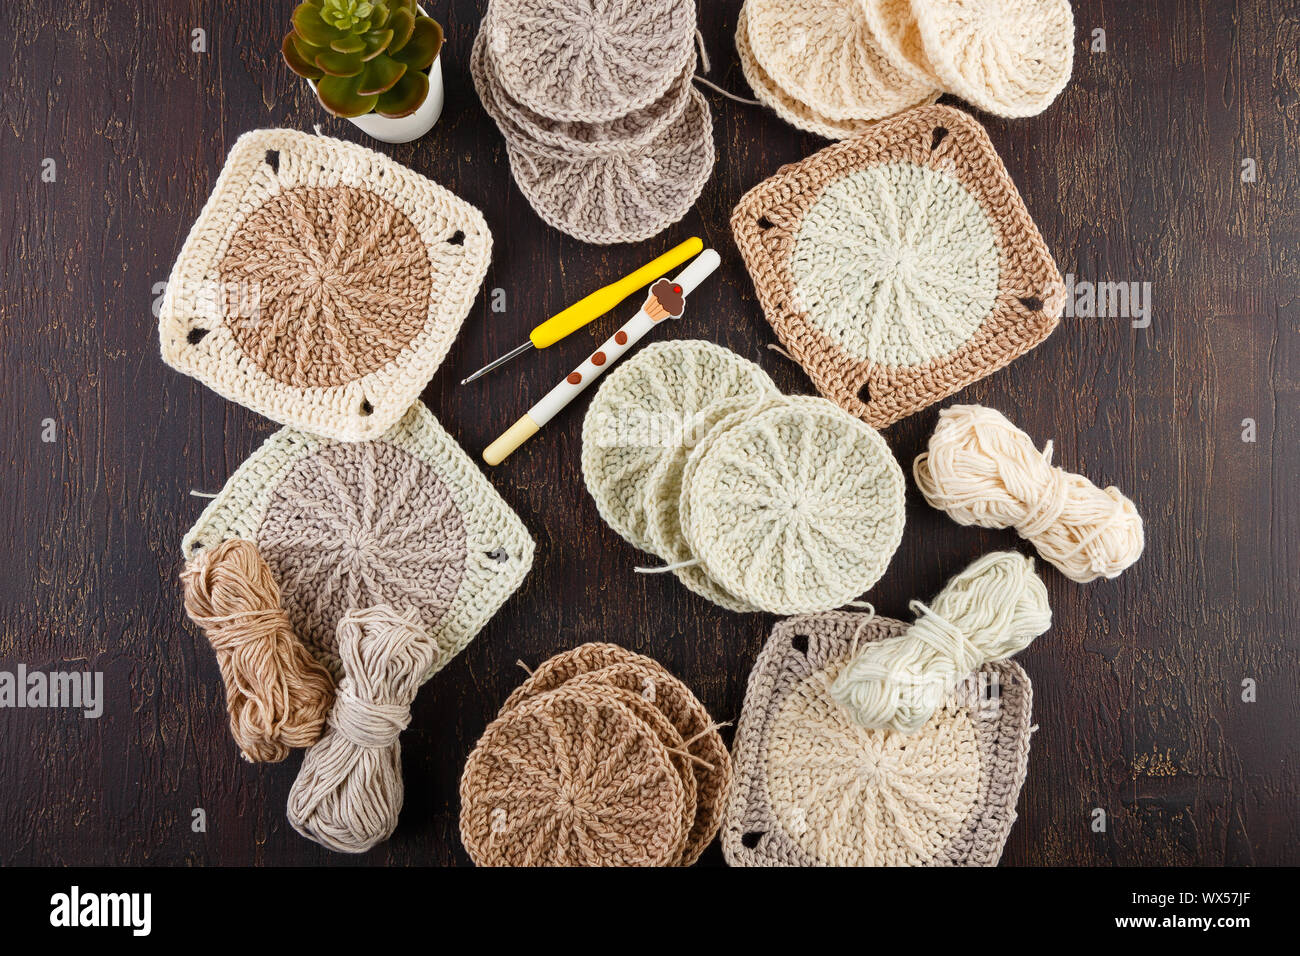 Crochet yarn, crochet hooks, and hand made granny squares. Stock Photo